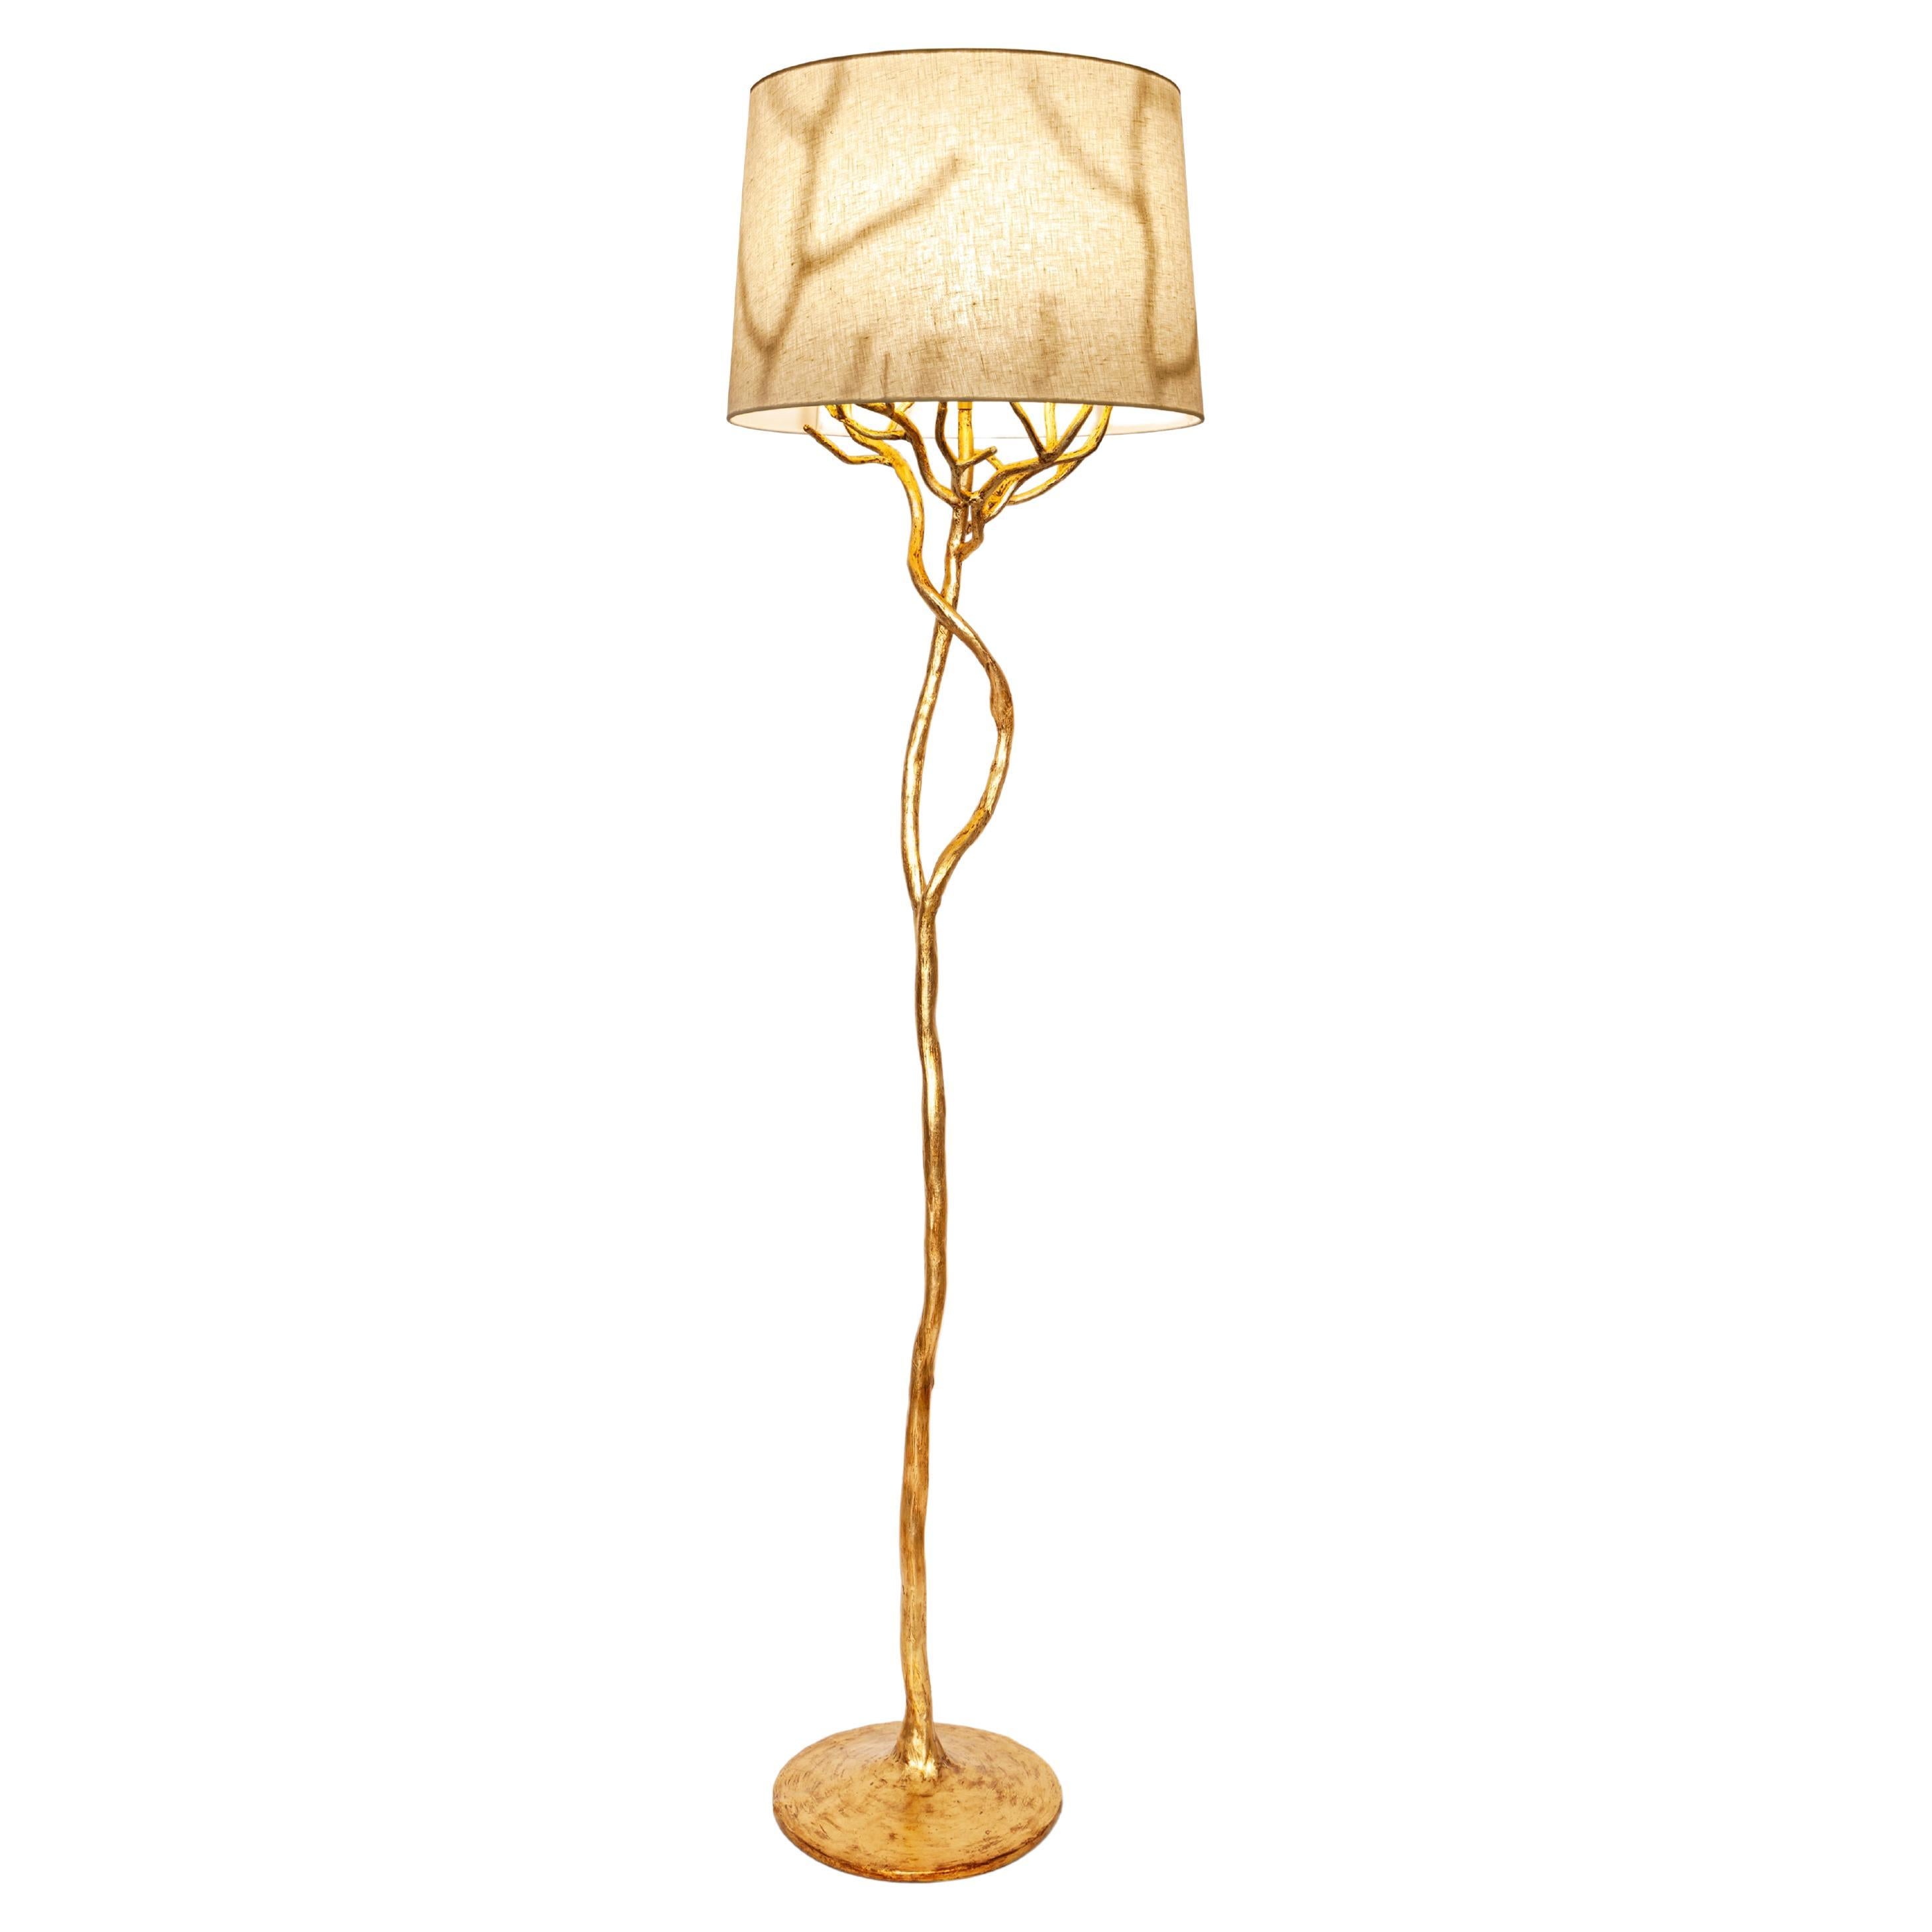 Organic Floor Lamp “Etna” in Antique Gold Finish, Benediko For Sale